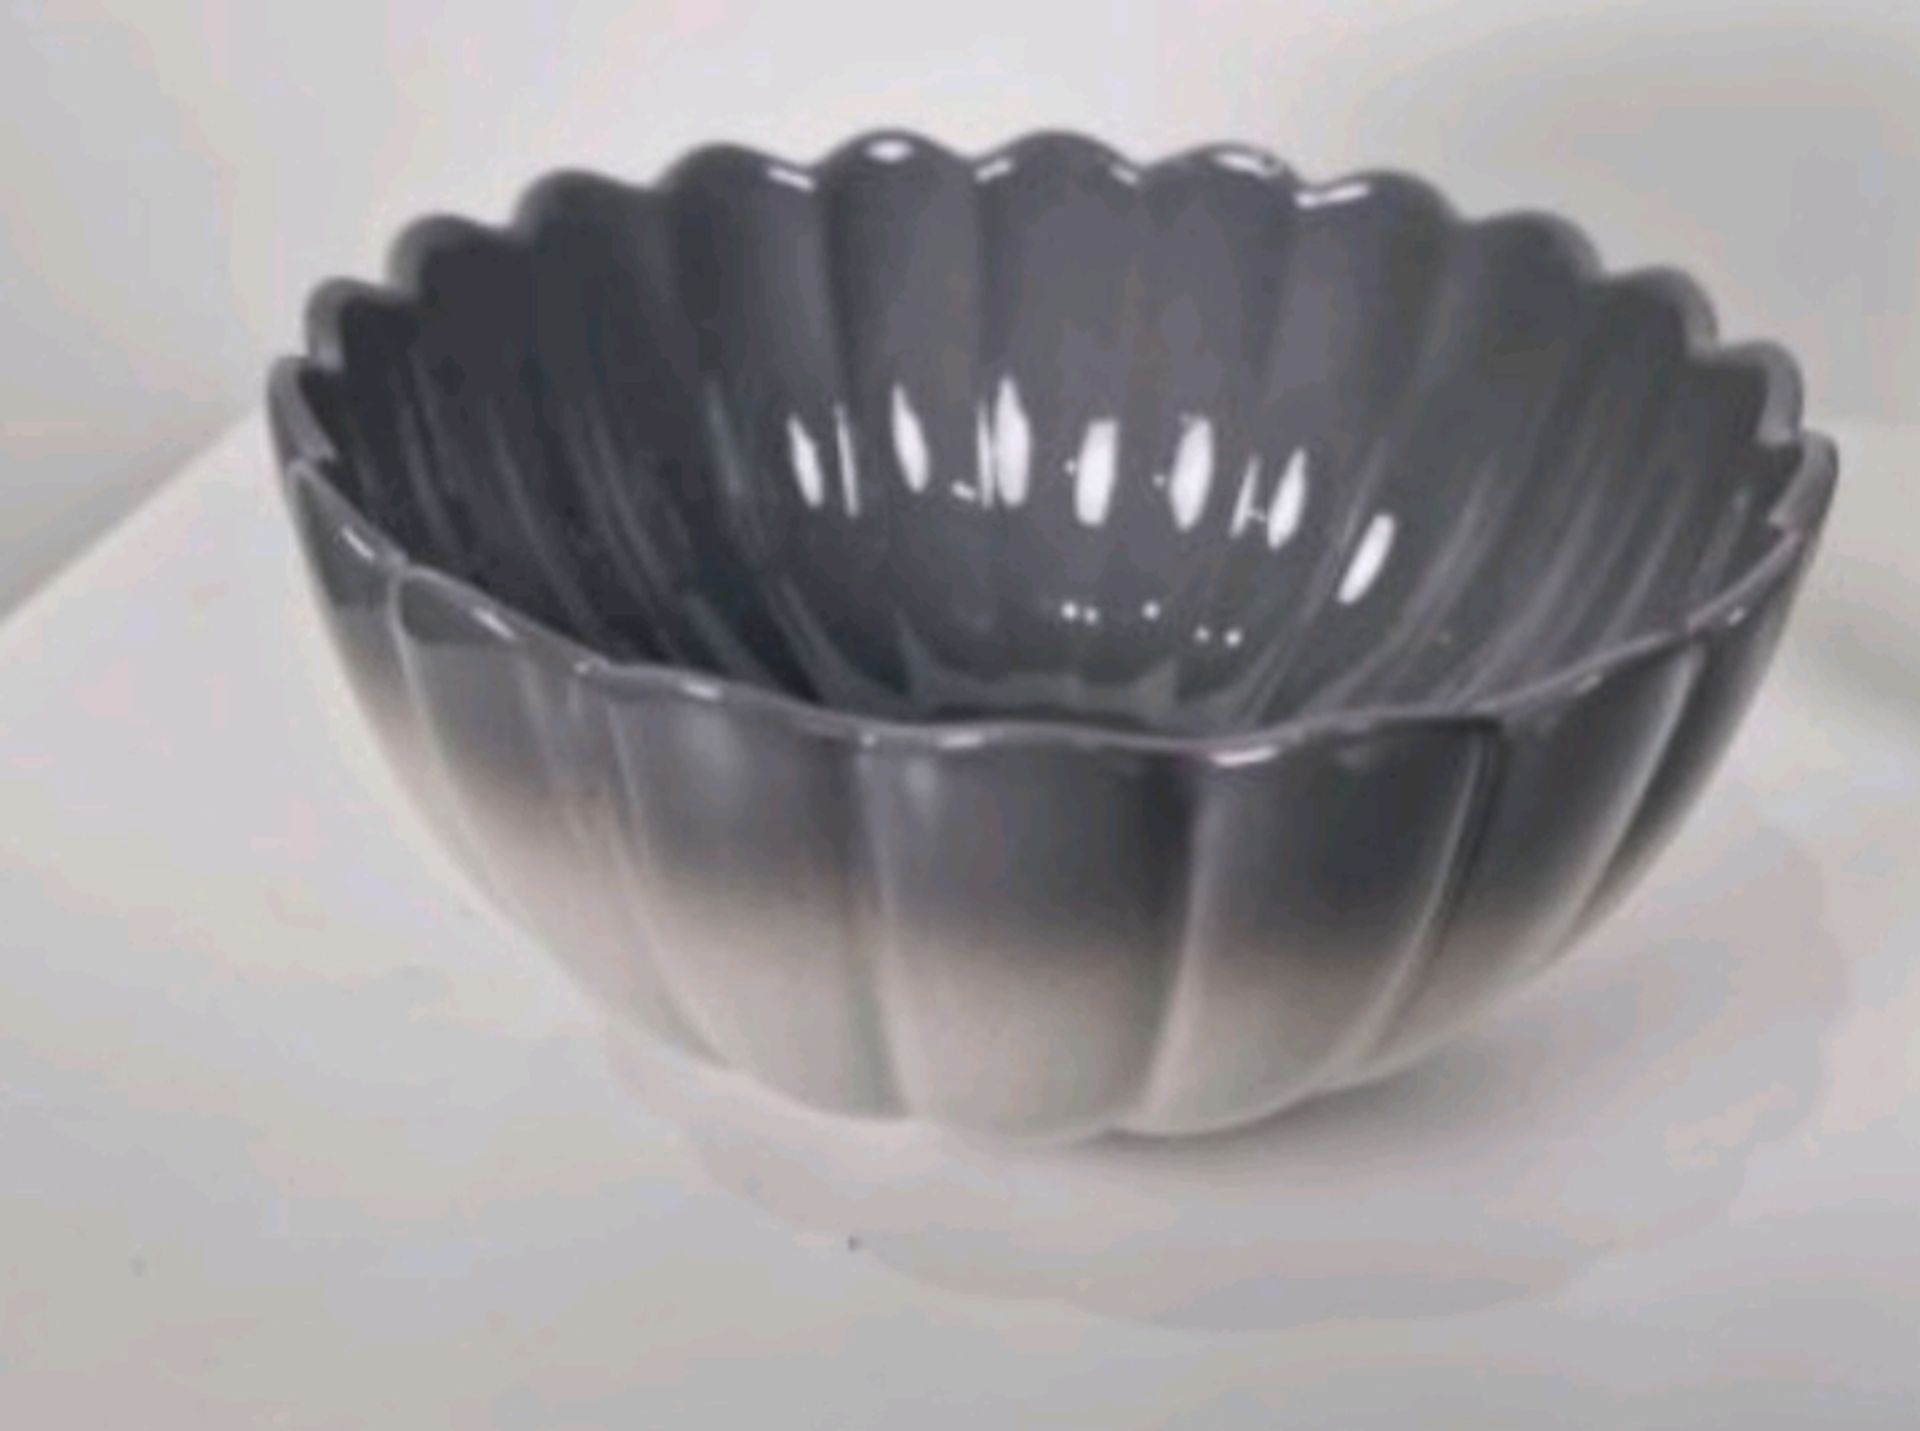 Decorative Bowls Set of 4 - Image 2 of 3